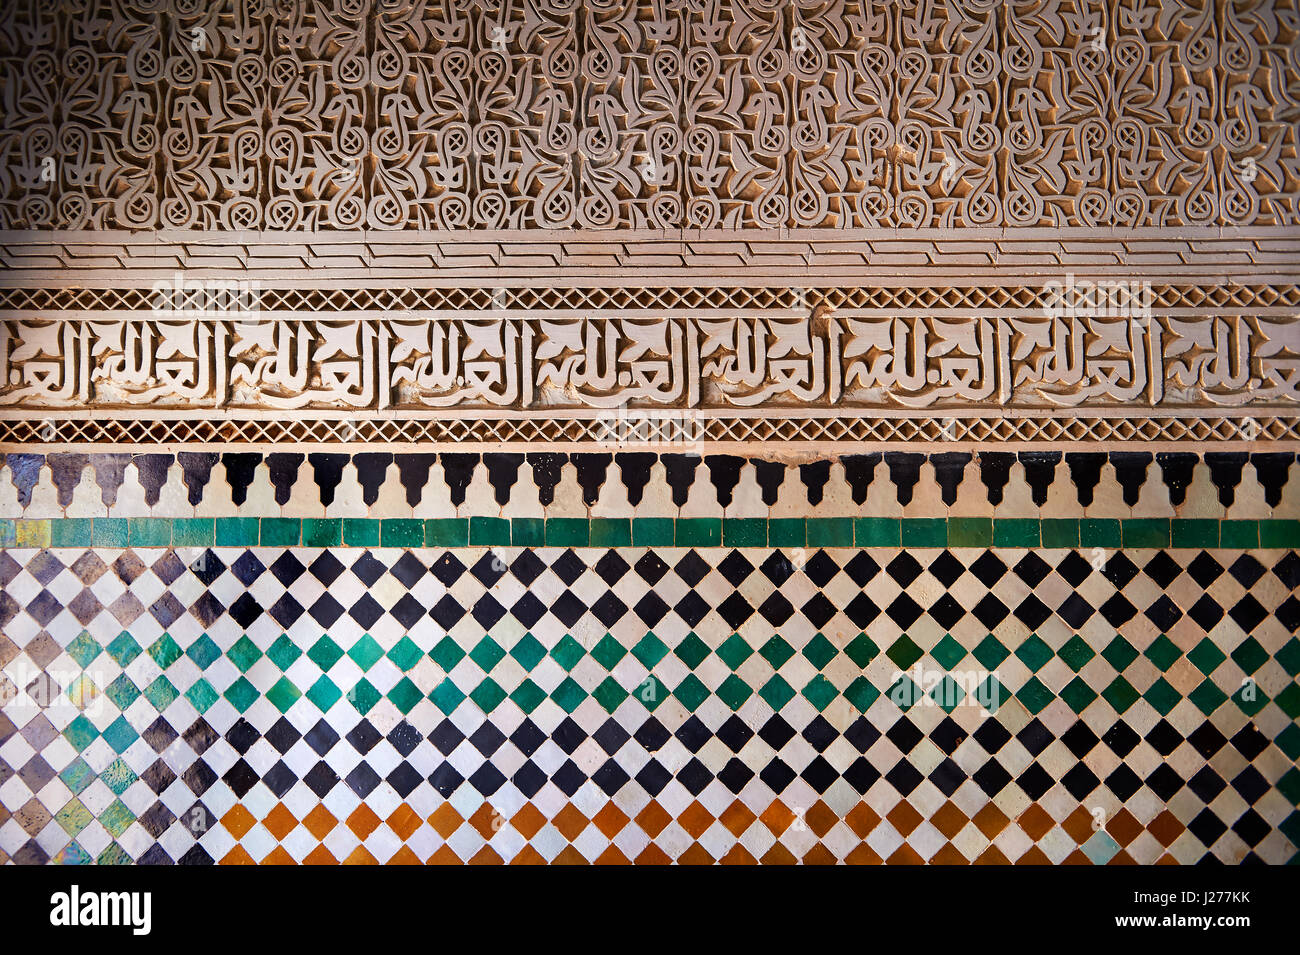 Berber Mocarabe Honeycomb arbeiten Putz Dekorationen und Berber-Design-Fliesen des 17. Jahrhunderts Berber Pavillons der Sultan Moulay gebaut Botschafter Stockfoto